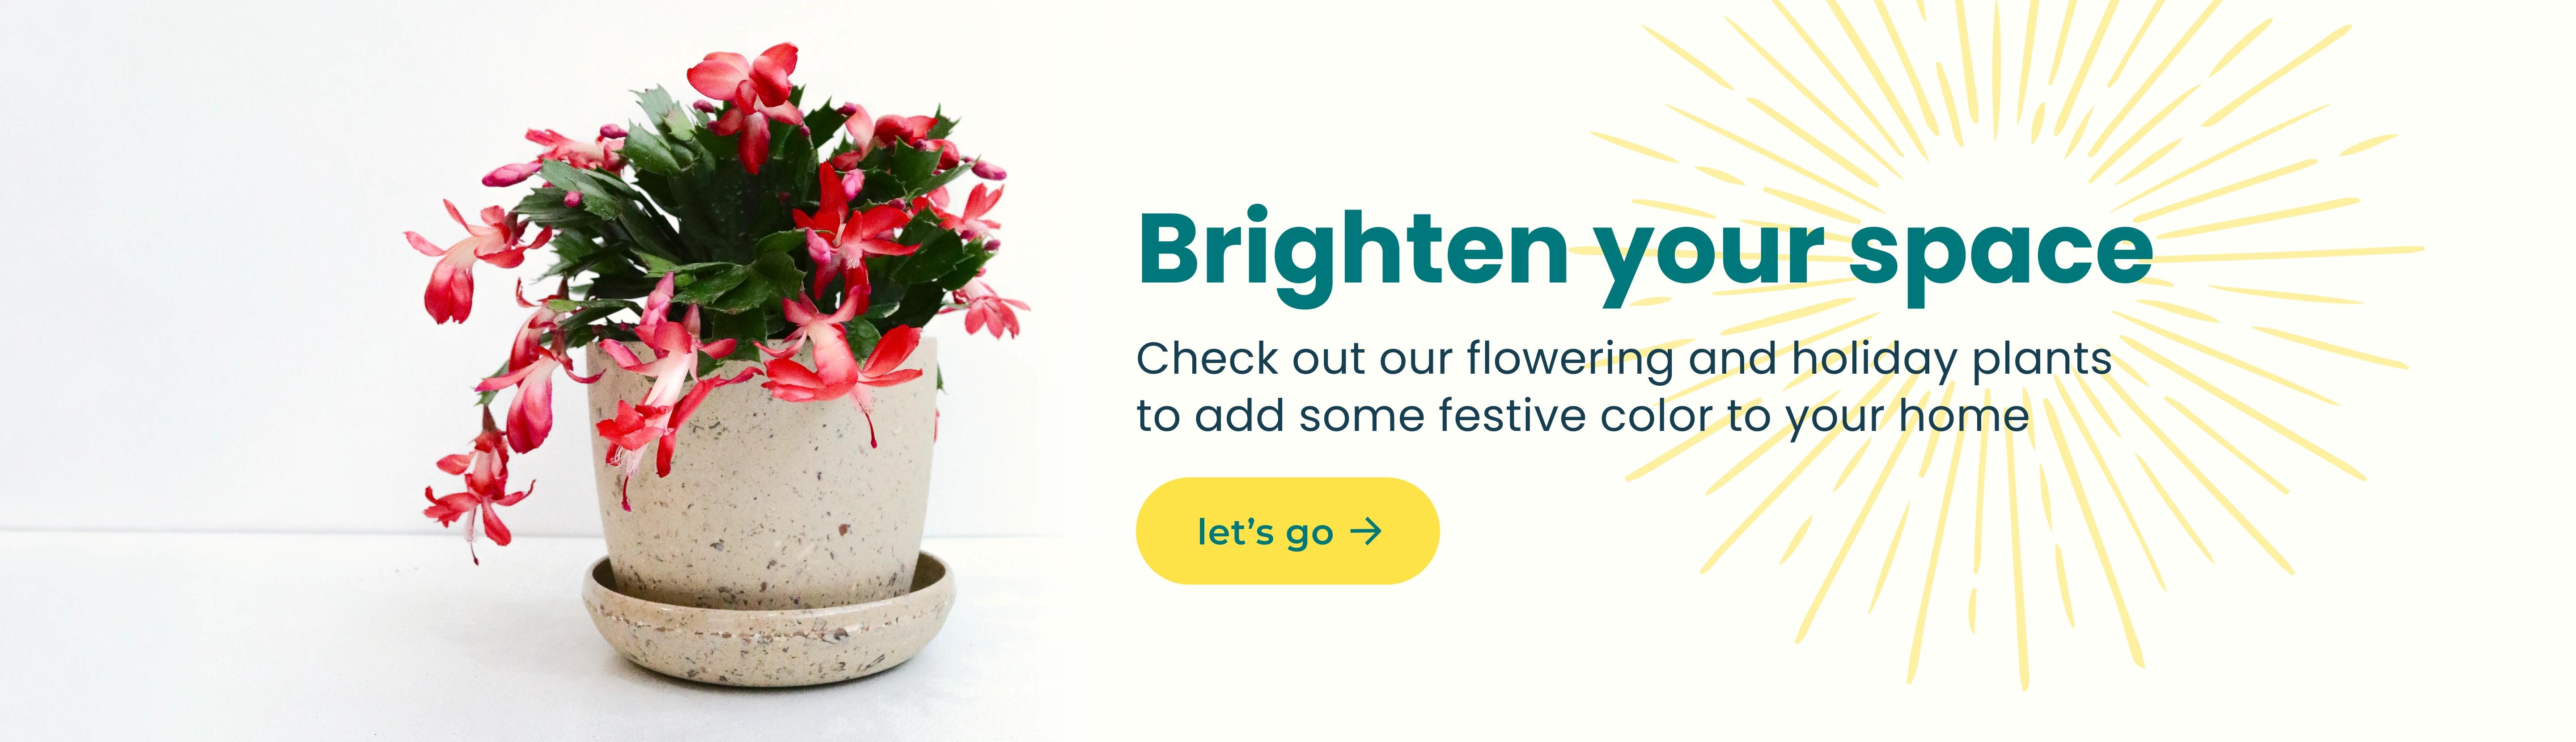 Brighten your home